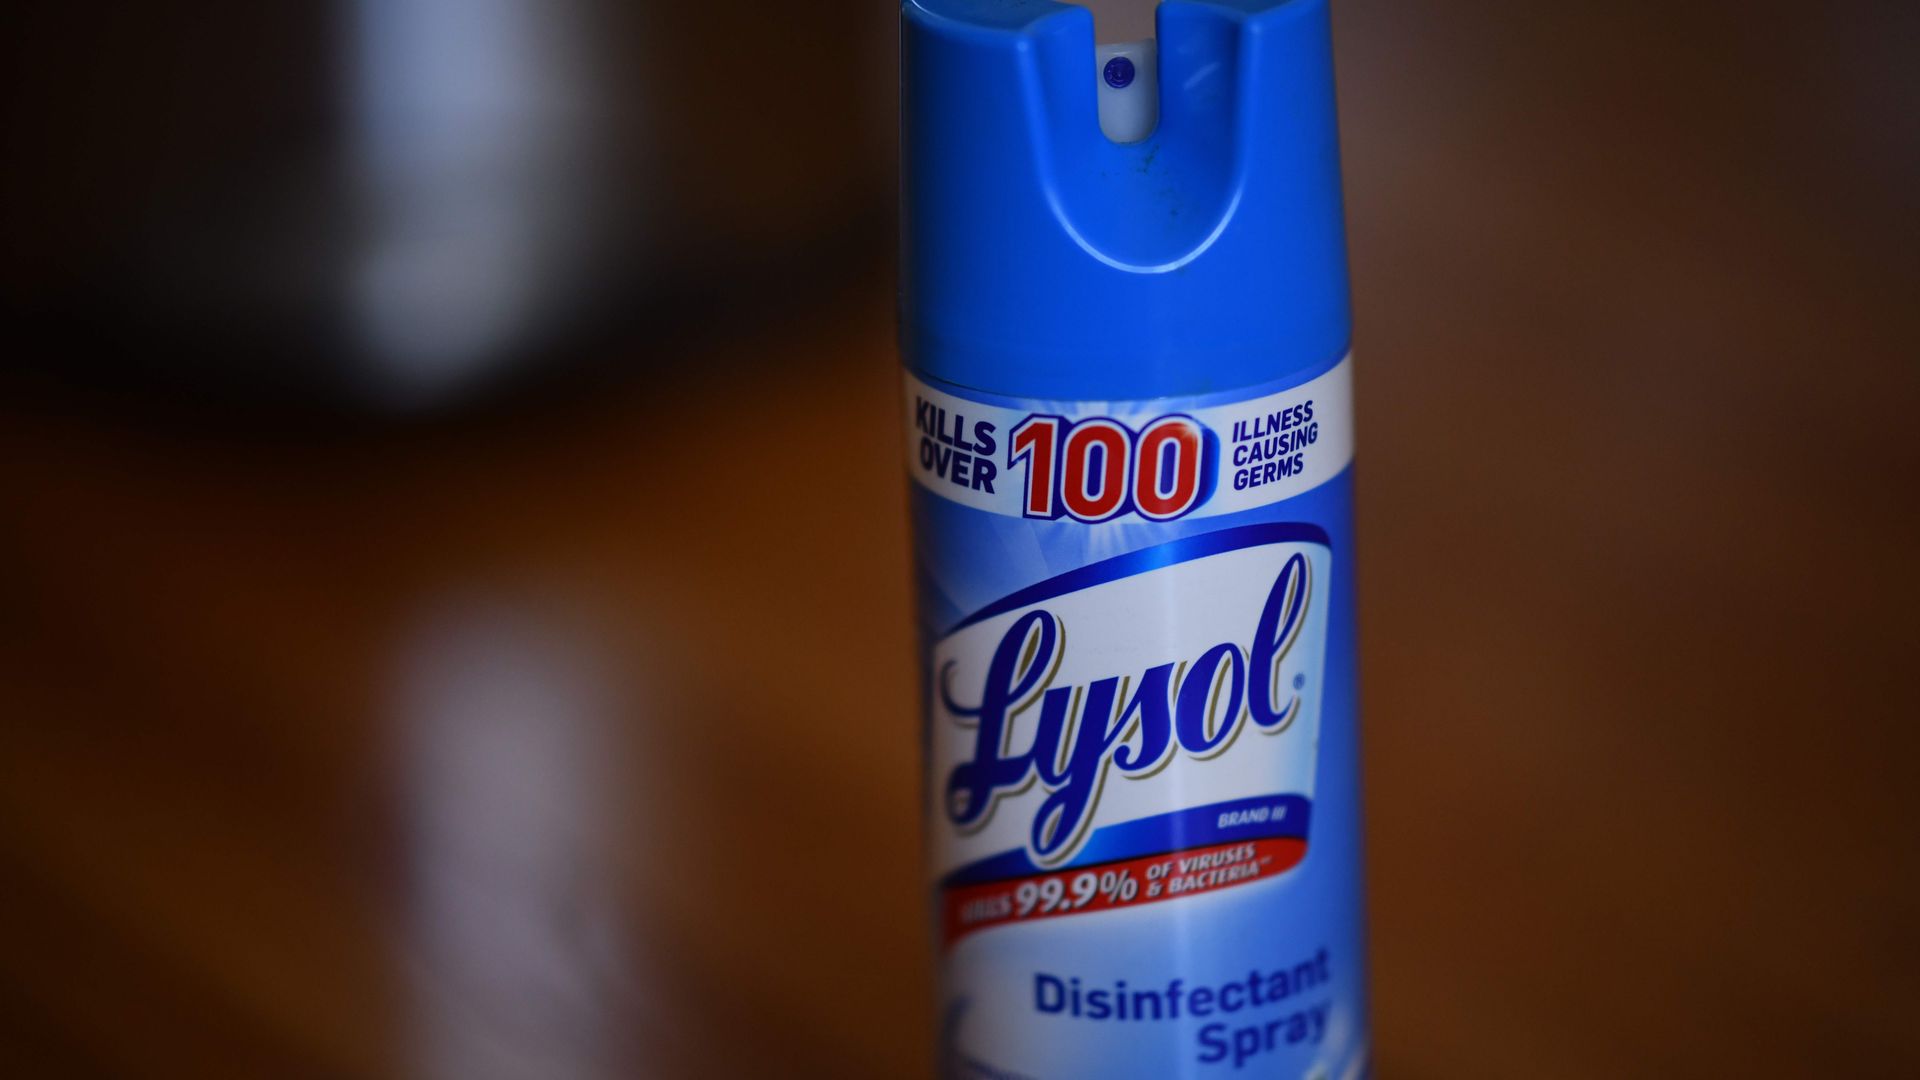 A Lysol spray bottle